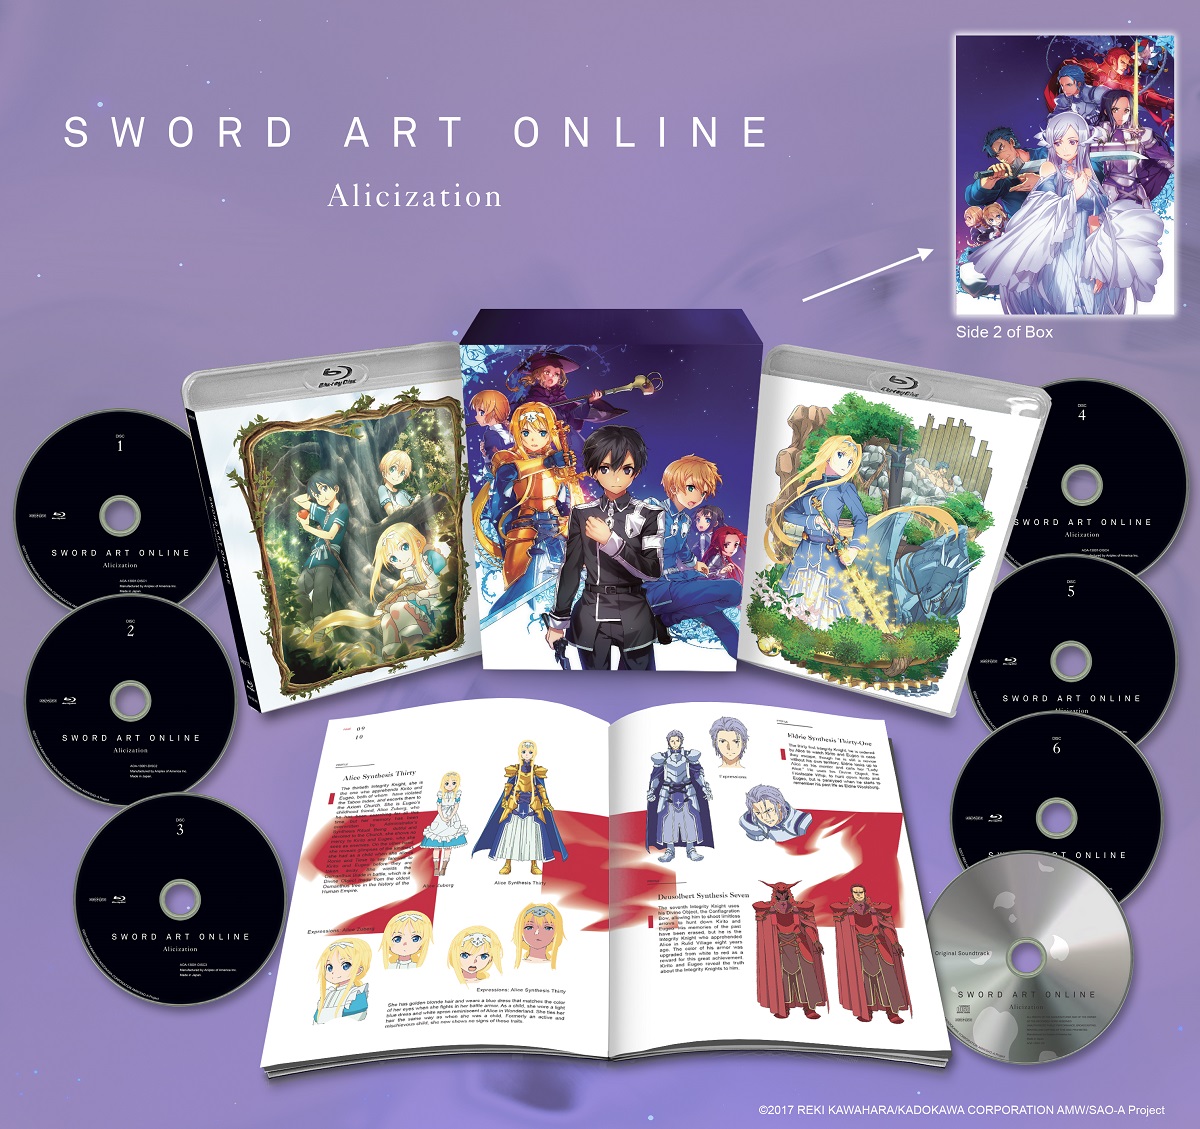 Sword Art Online Season 2 Streaming: Watch & Stream Online via Crunchyroll